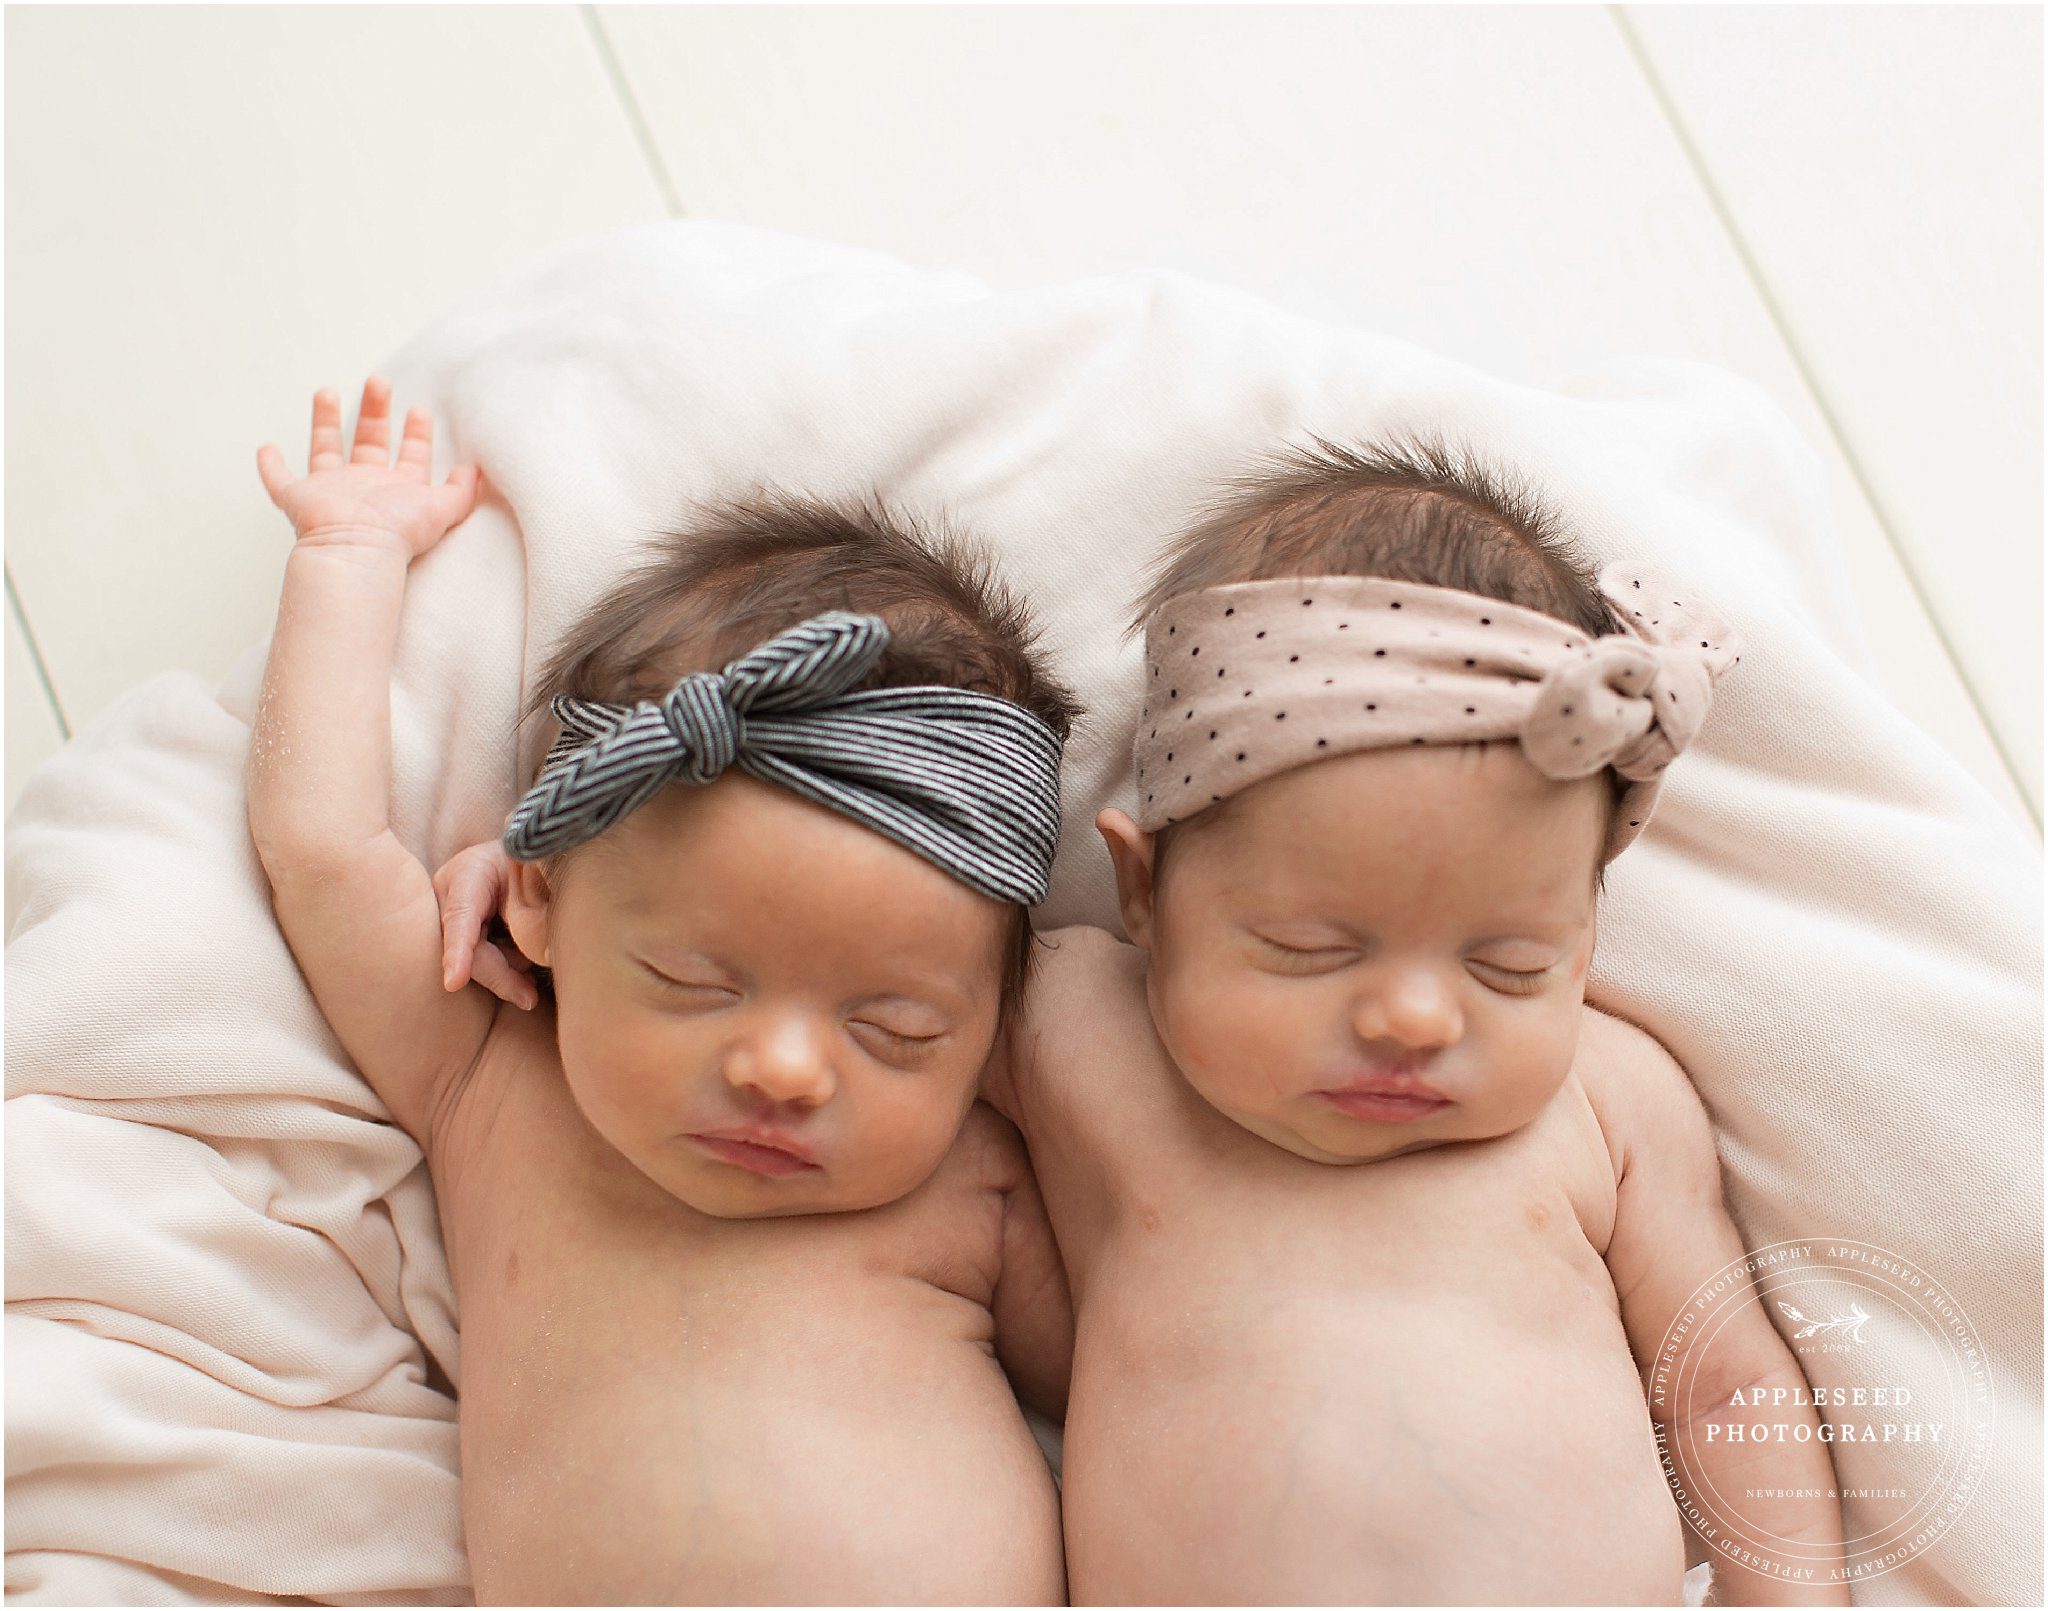 Twin Sisters | Atlanta Twin Photographer | Appleseed Photography